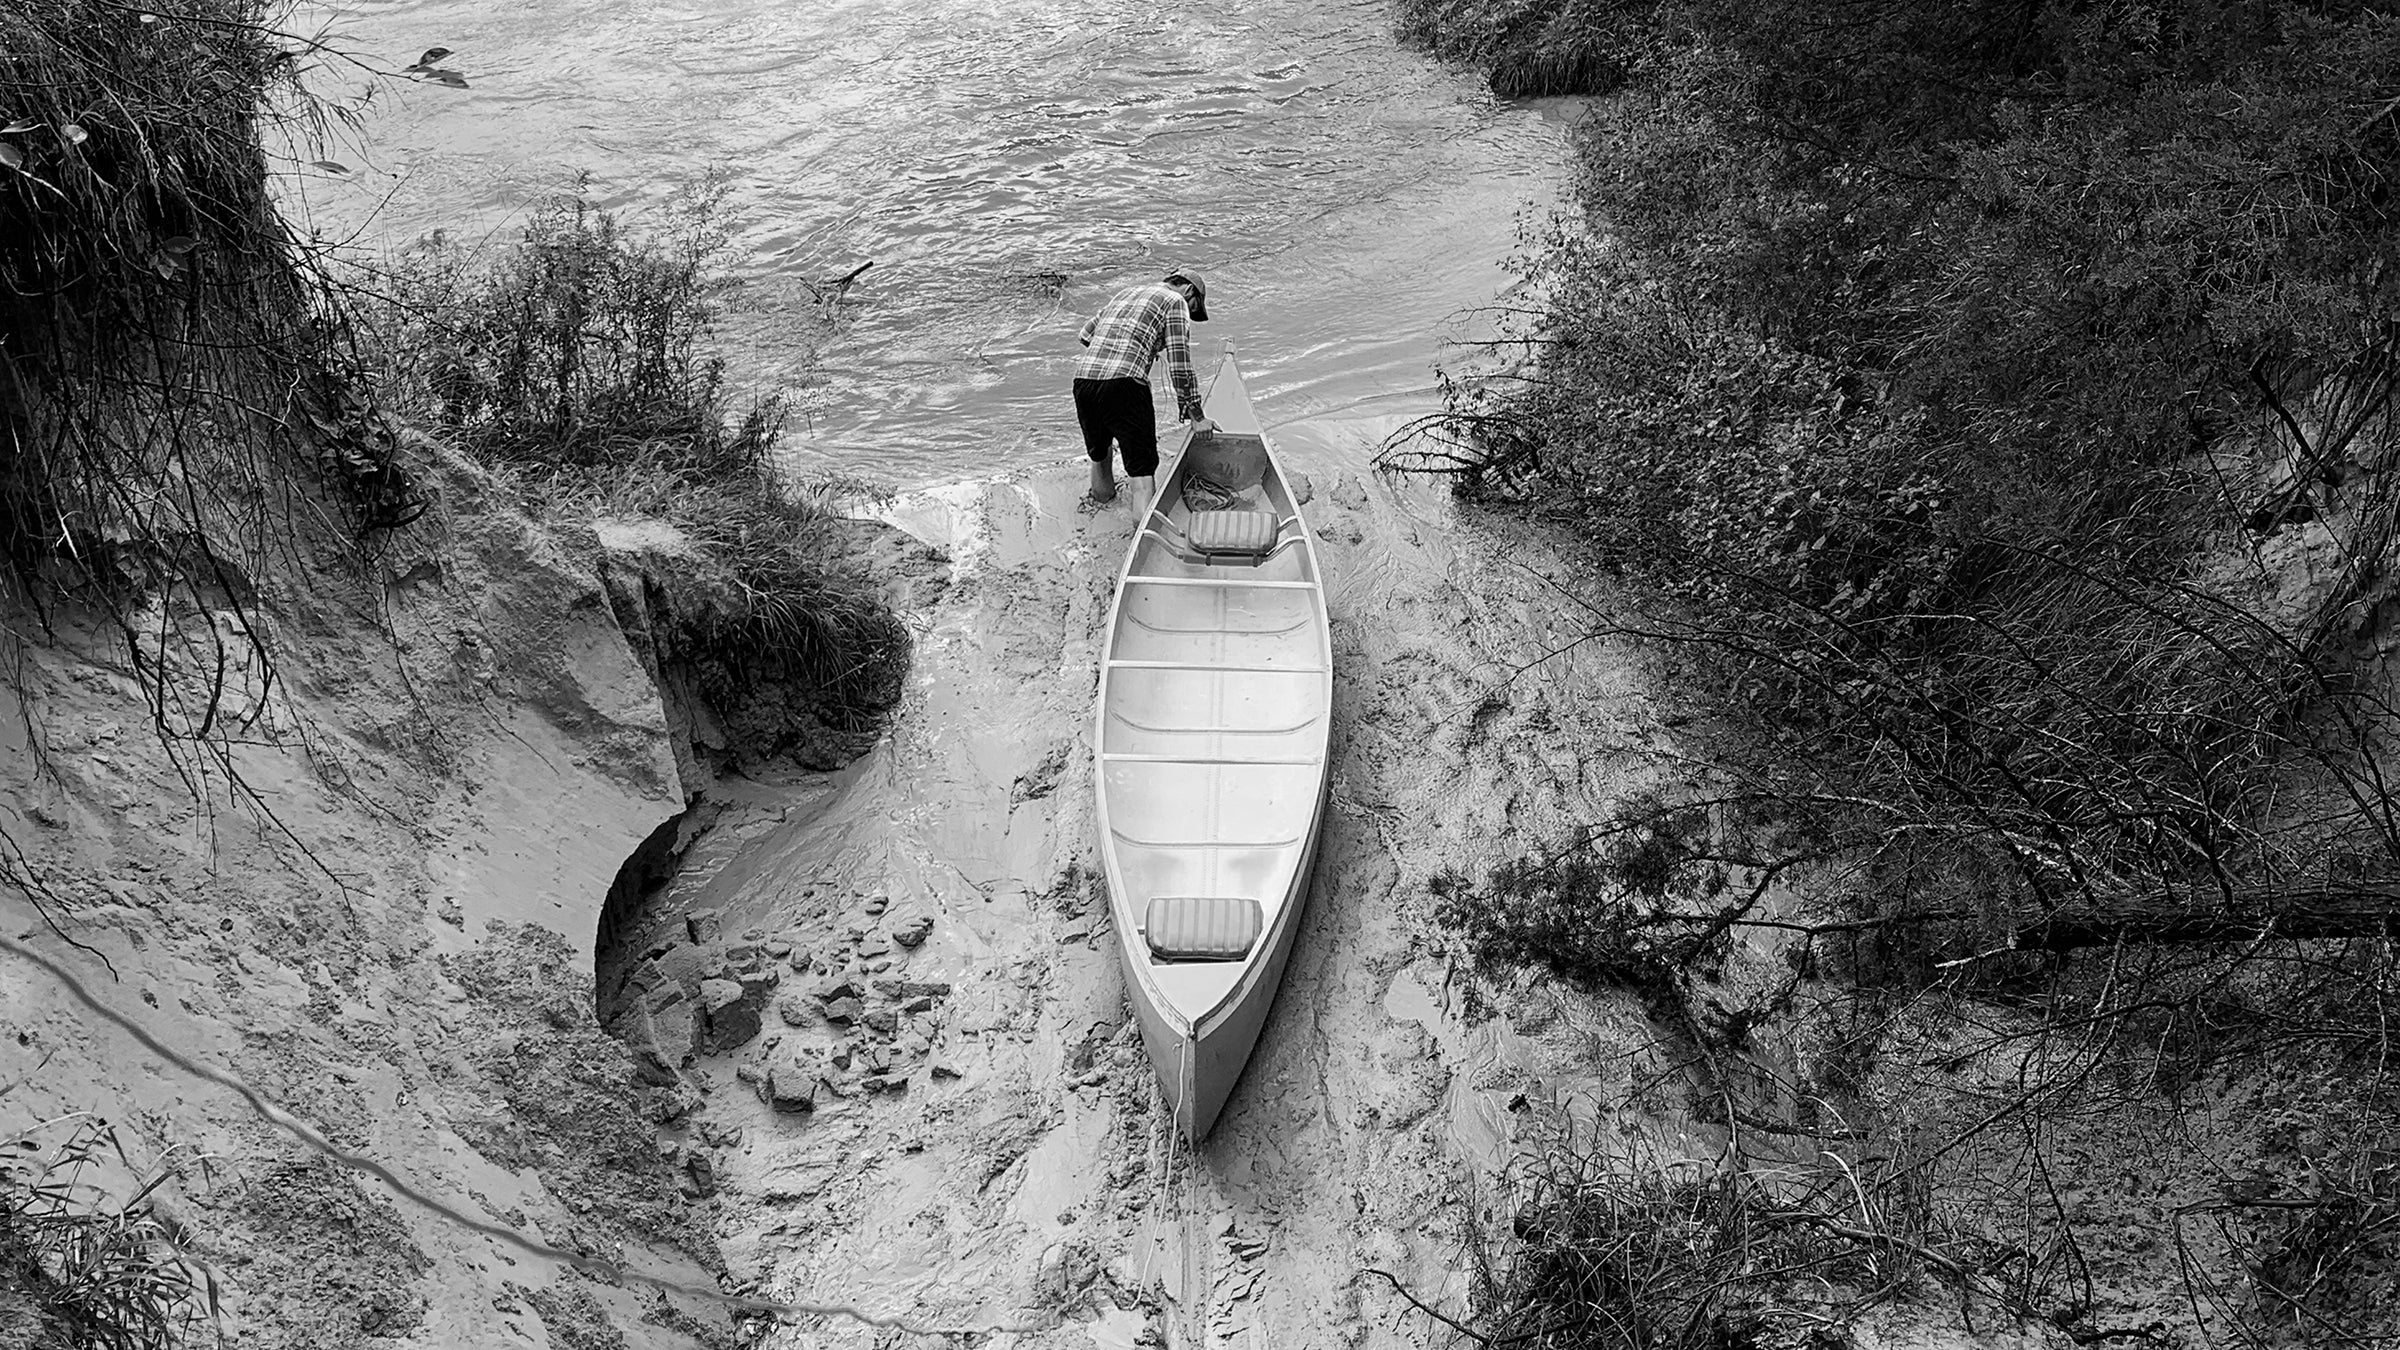 An Anniversary Canoe Trip Down Divorce River